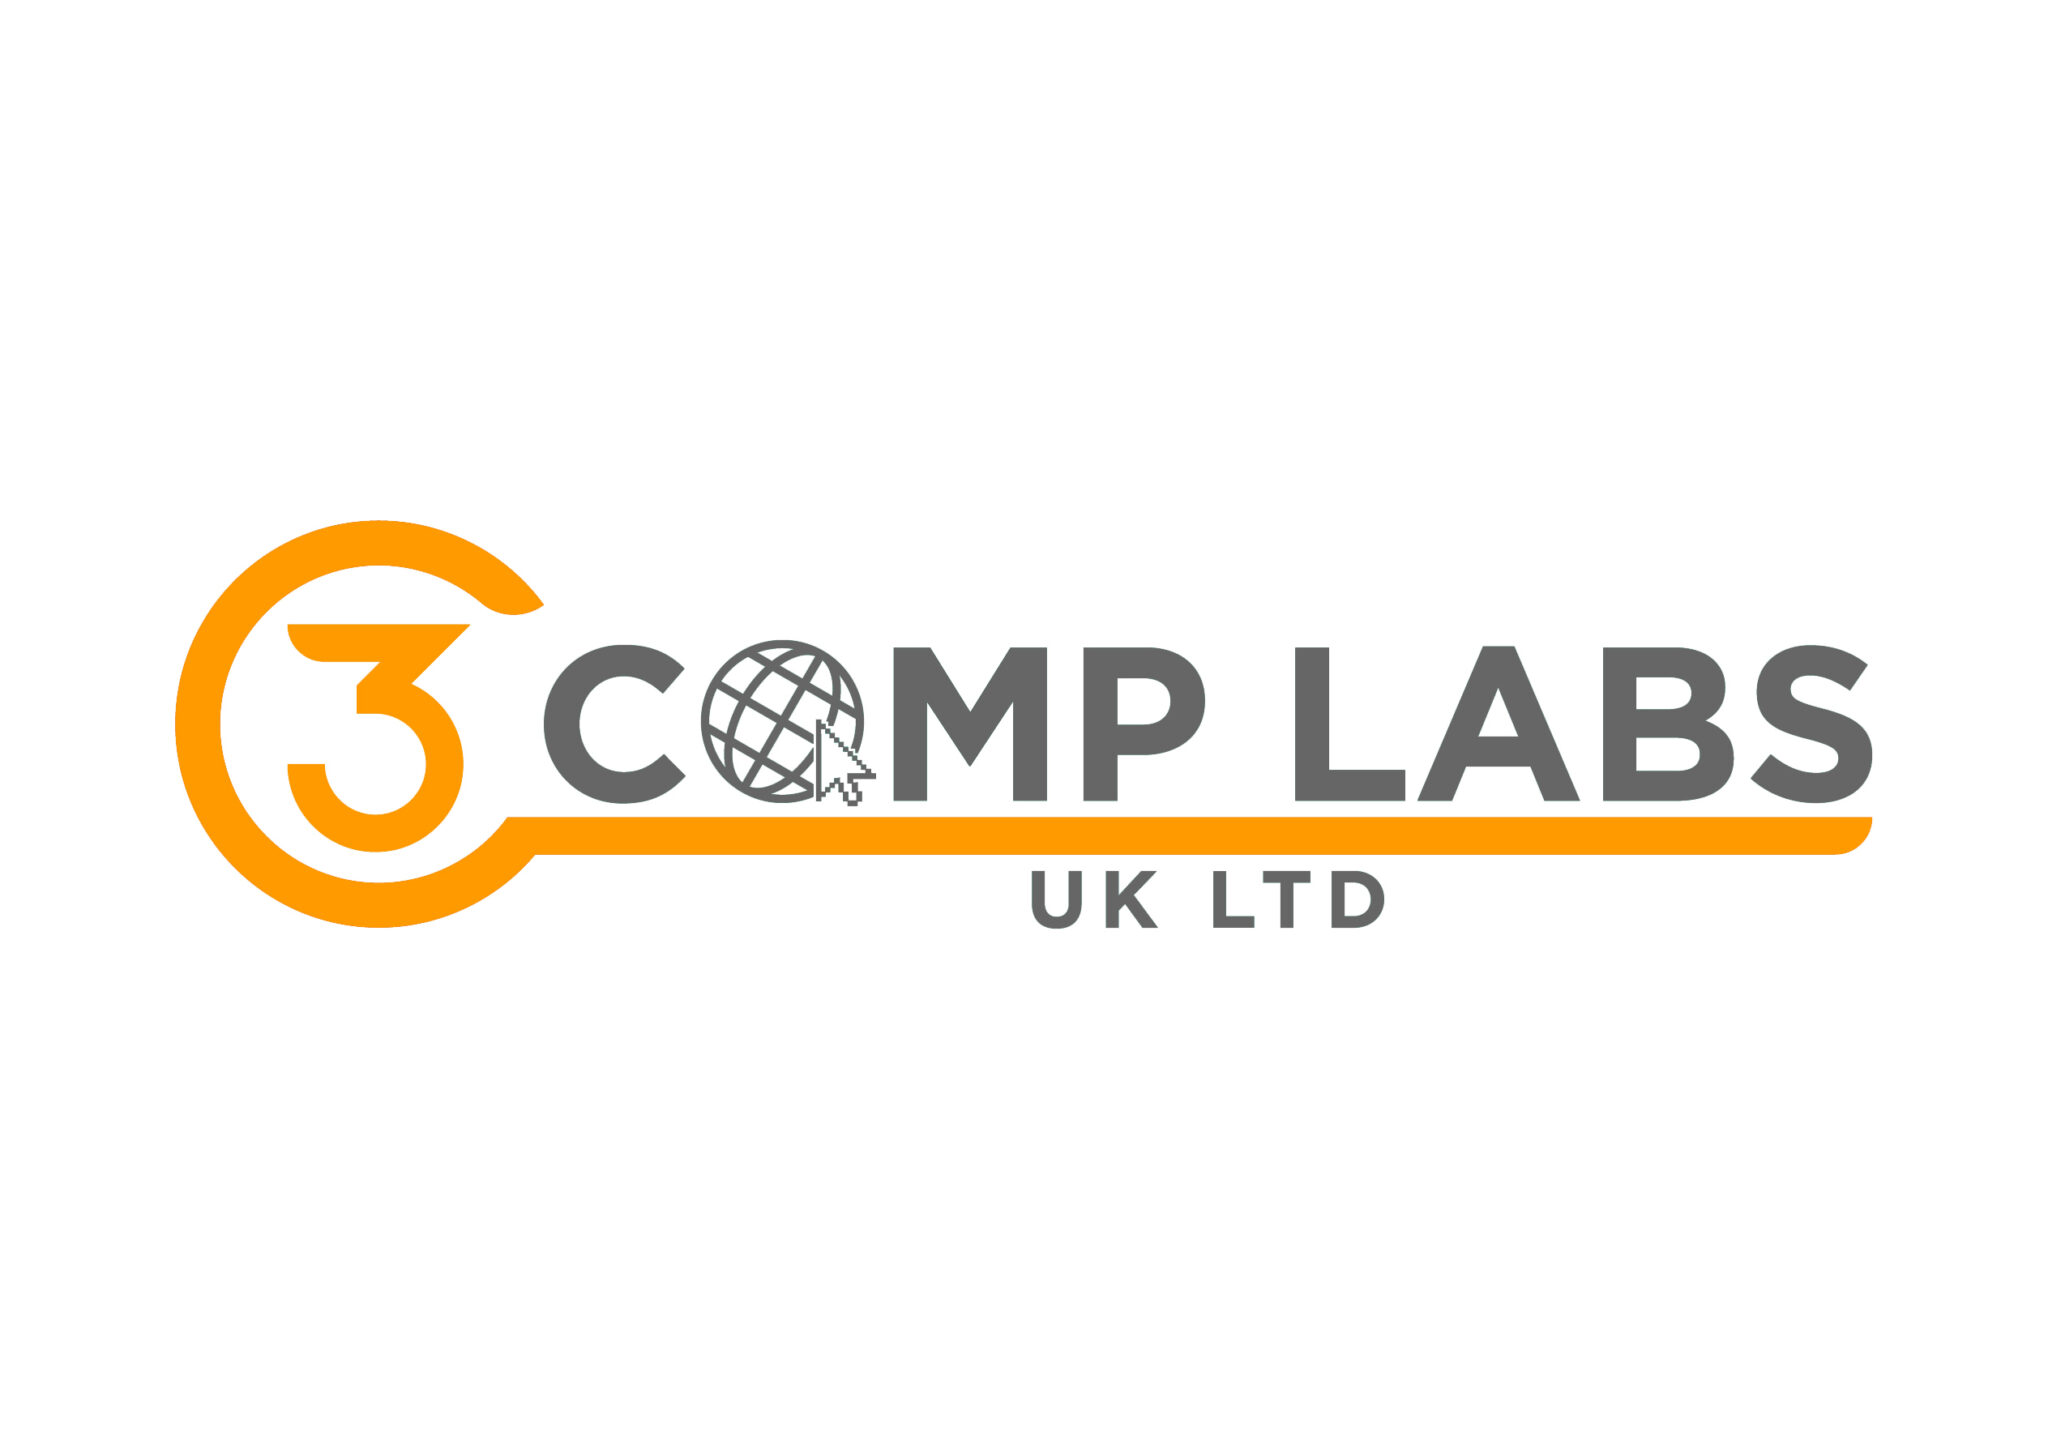 3 comp labs logo